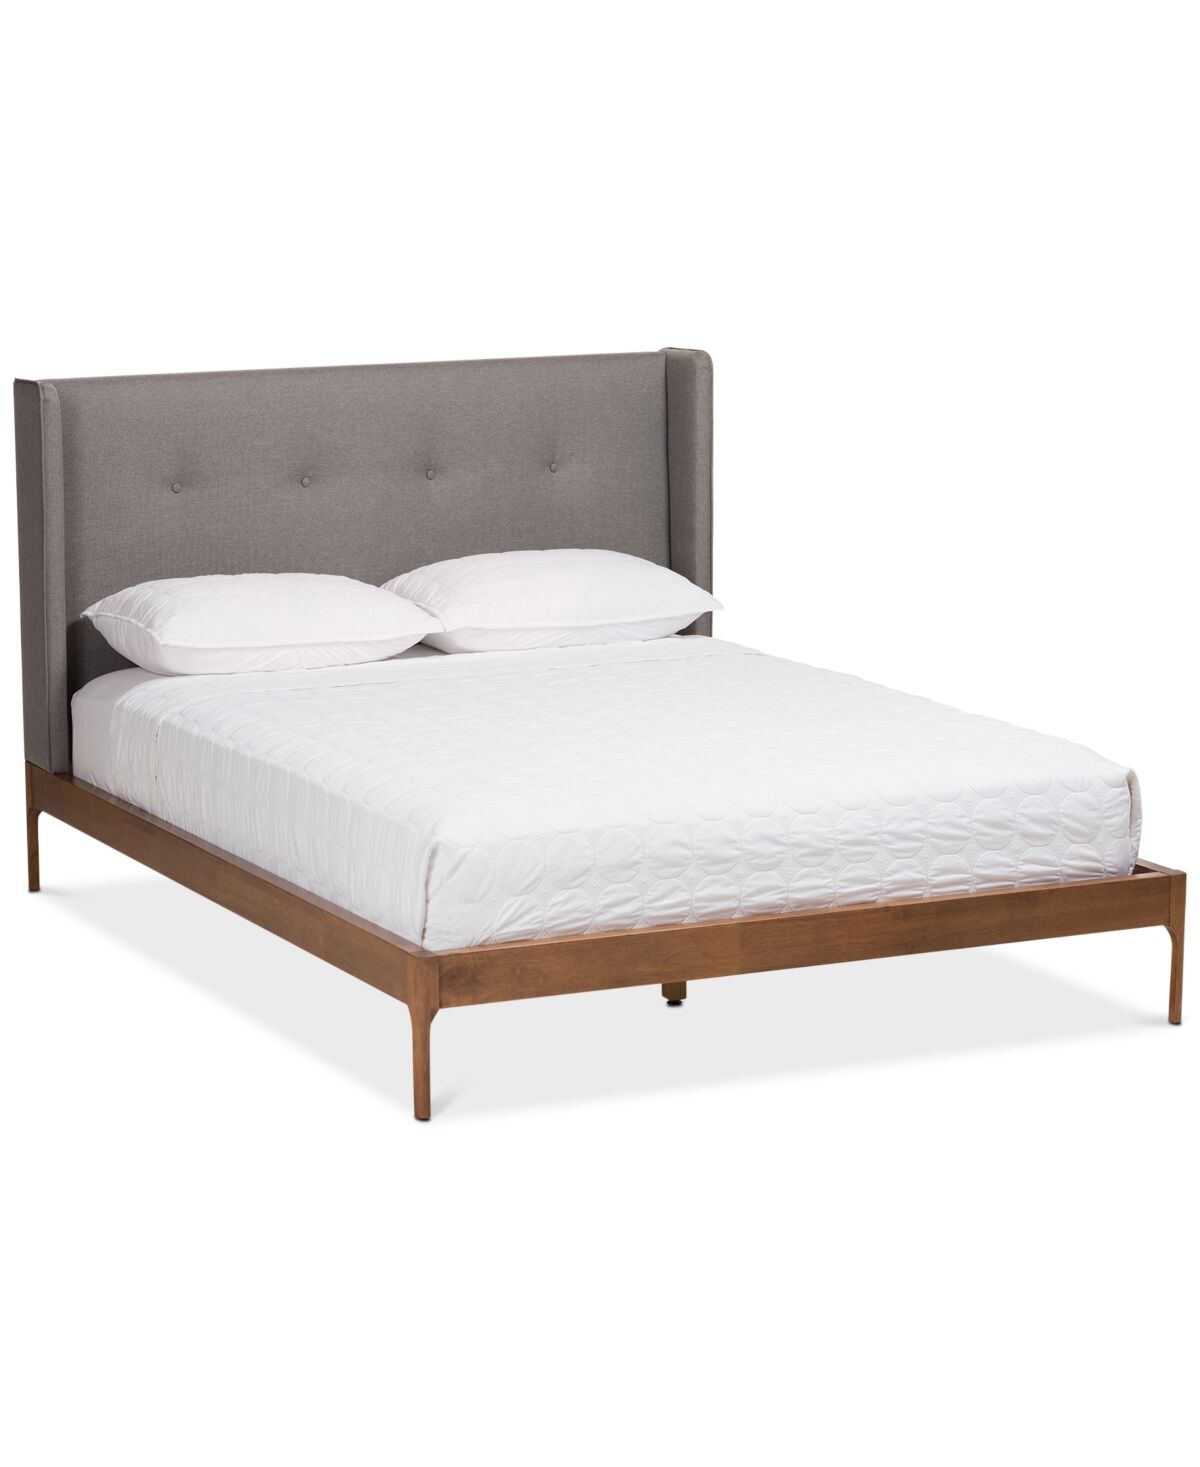 Furniture Corletta Queen Bed - Grey